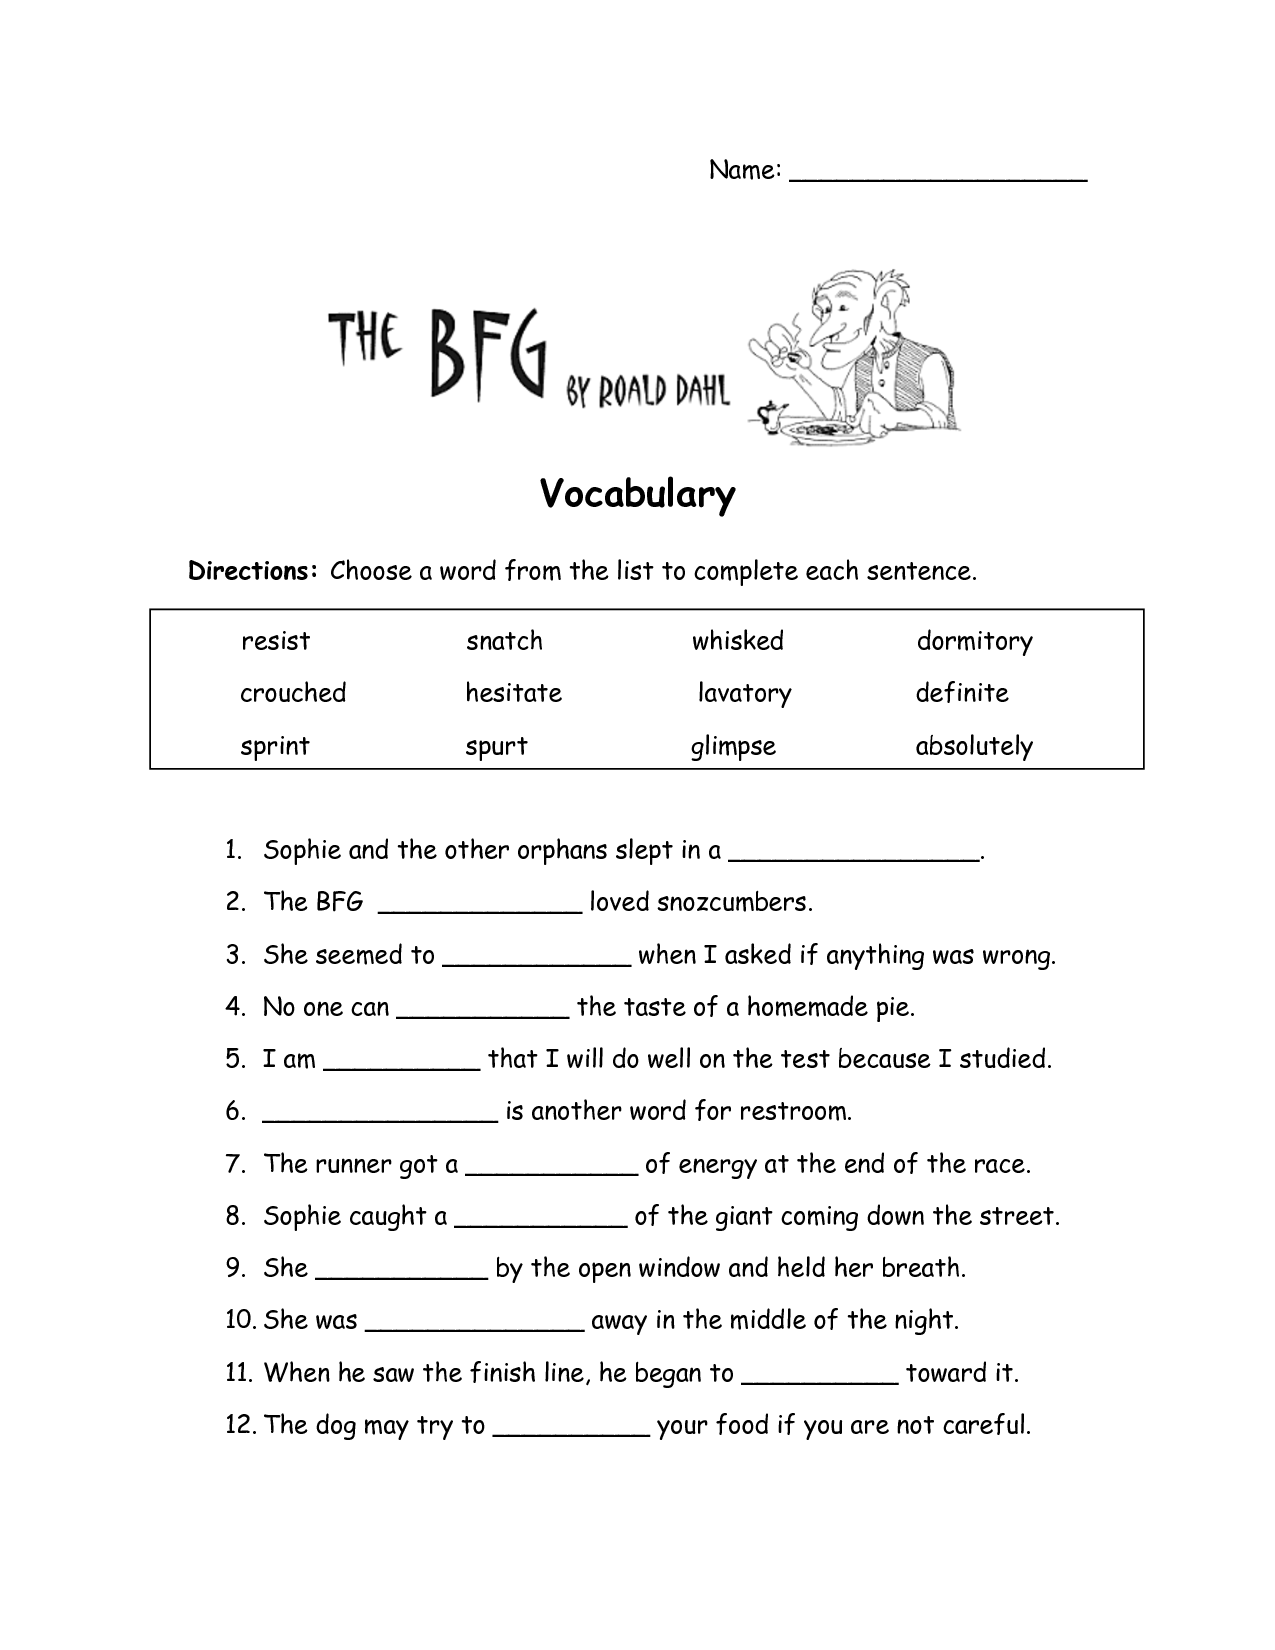 Free Printable Vocabulary Worksheets Image